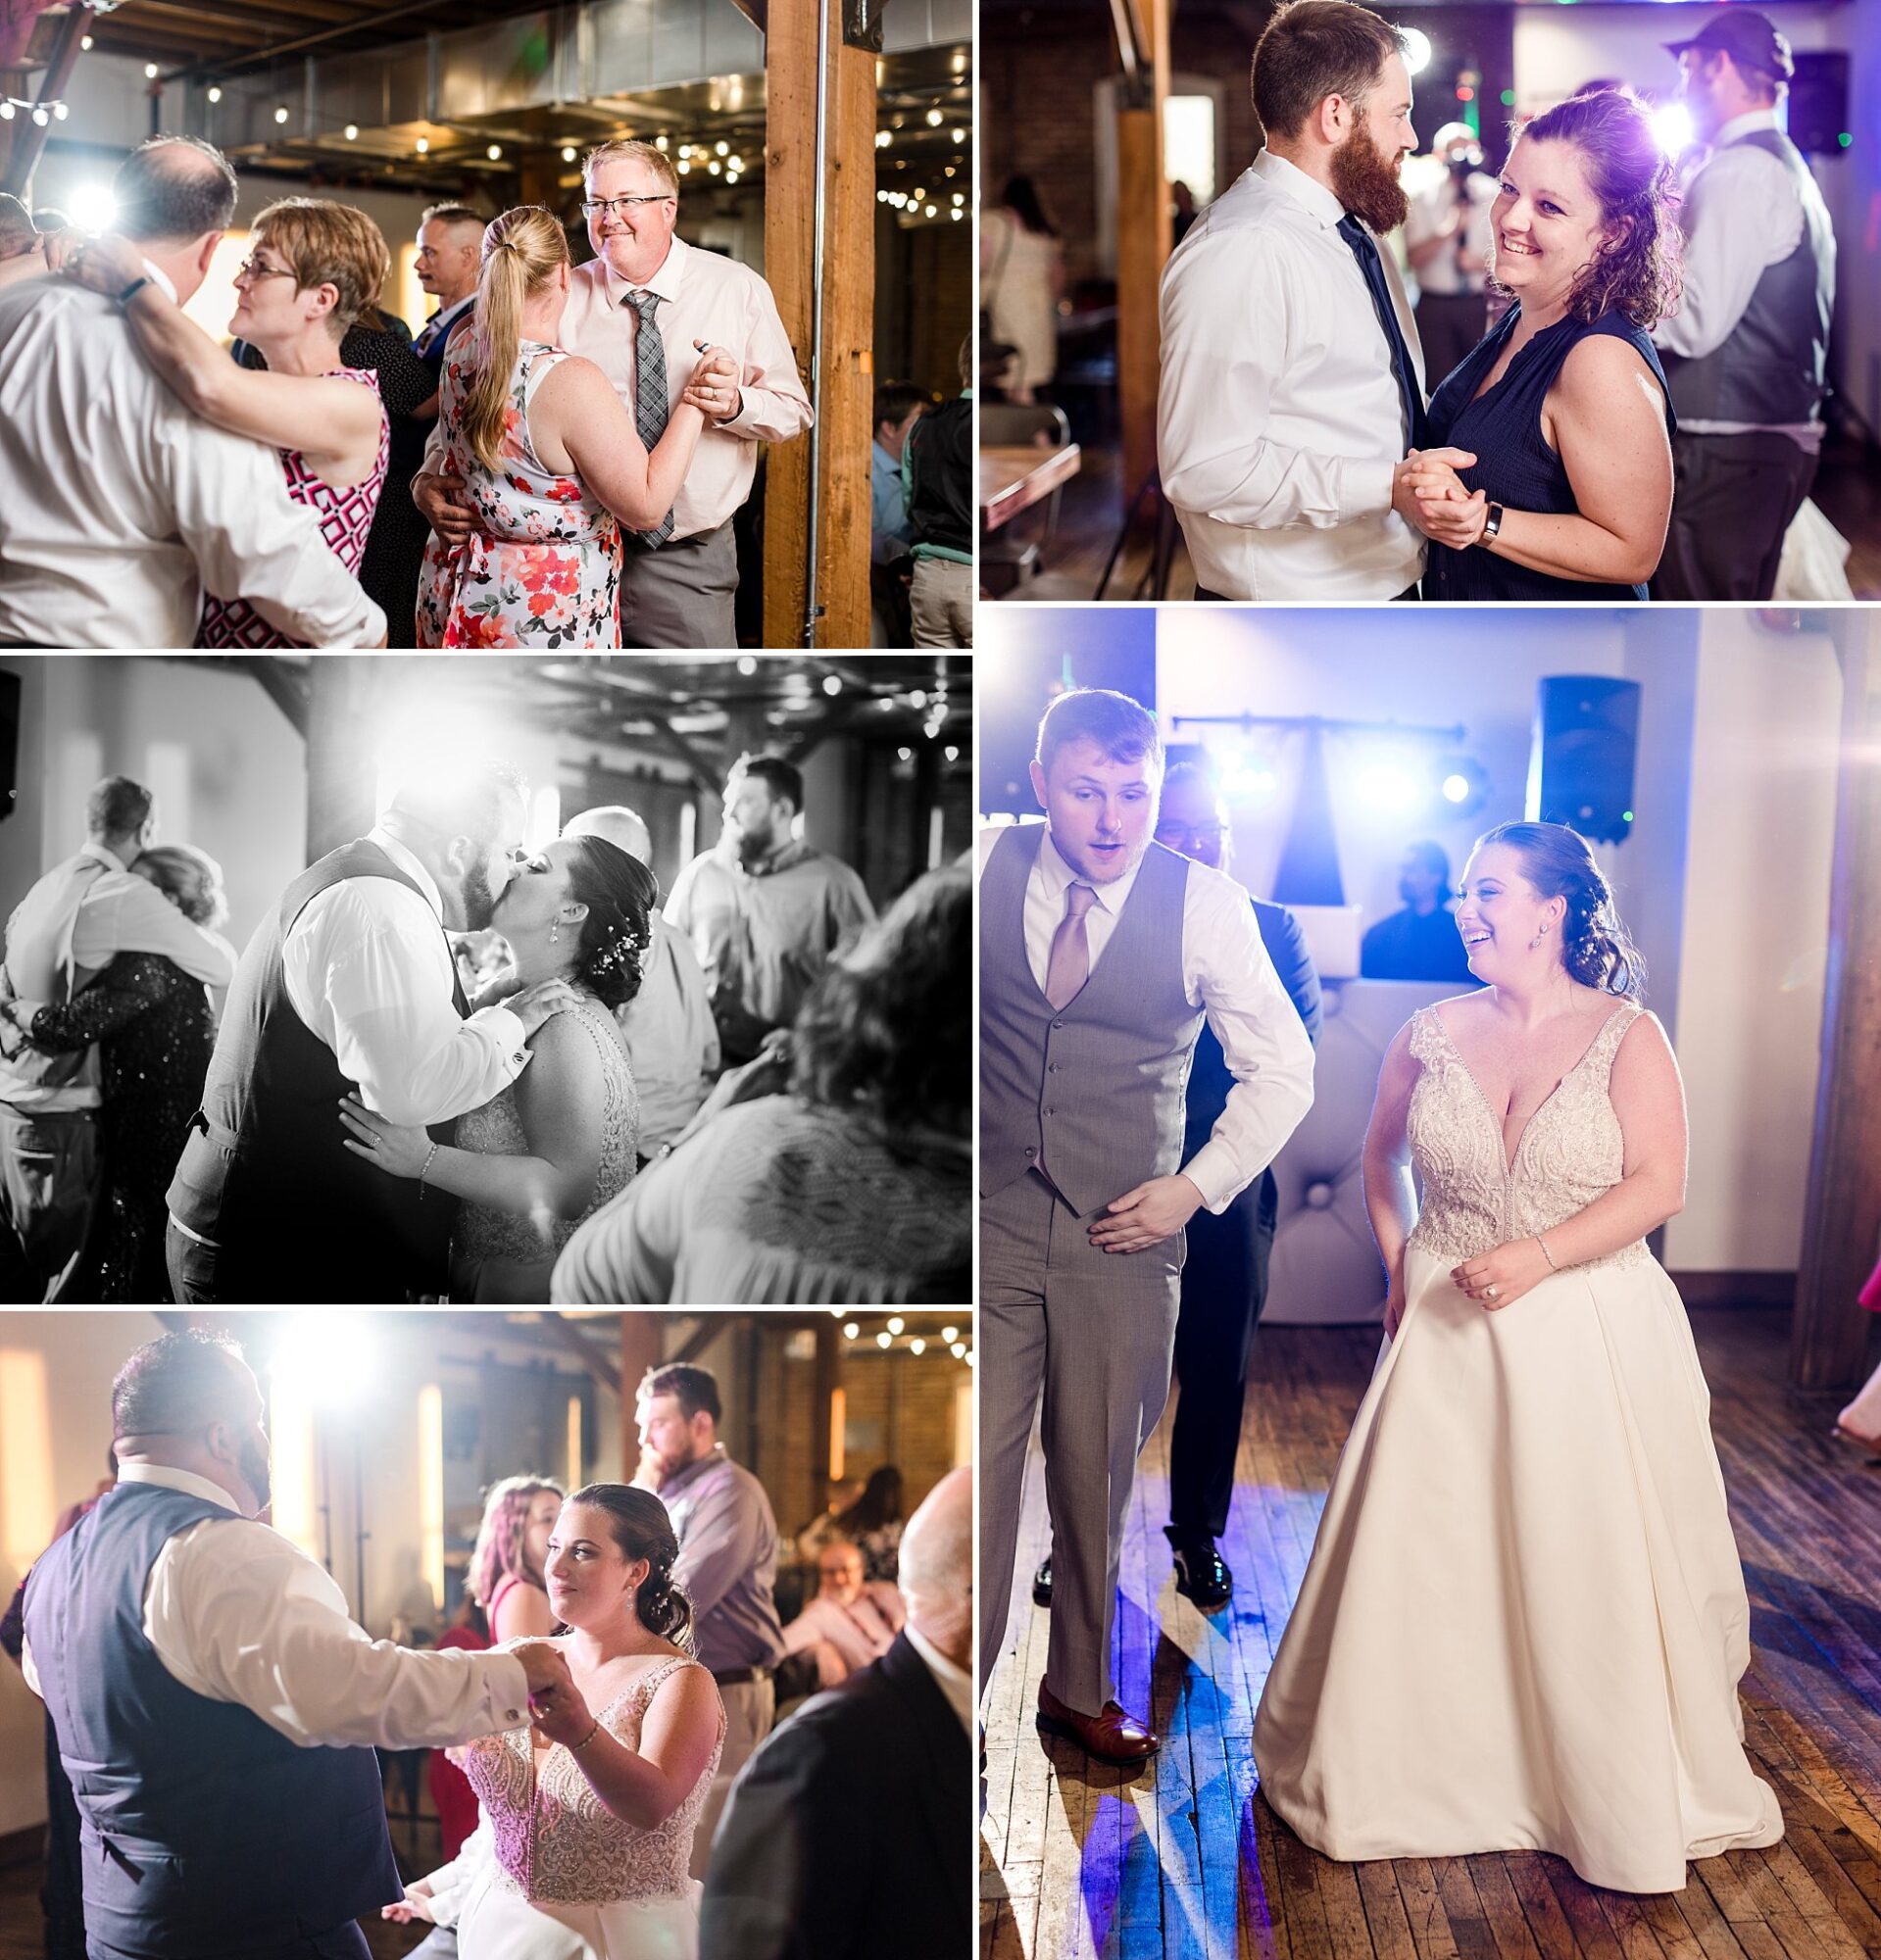 Record Box Loft Battle Creek, Michigan wedding reception dancefloor photographs